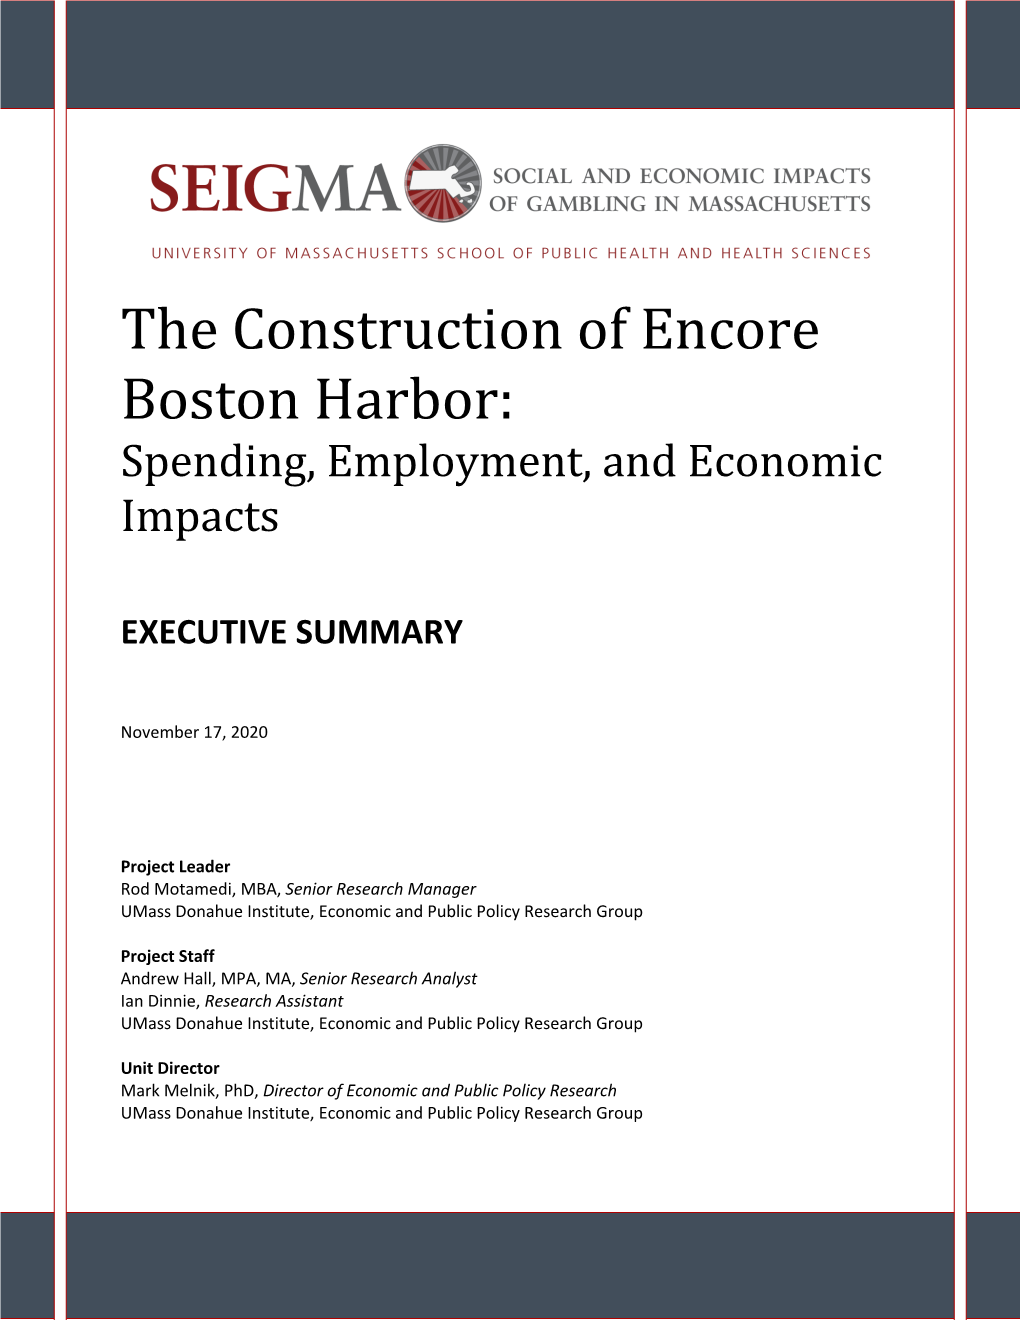 The Construction of Encore Boston Harbor: Spending, Employment, and Economic Impacts